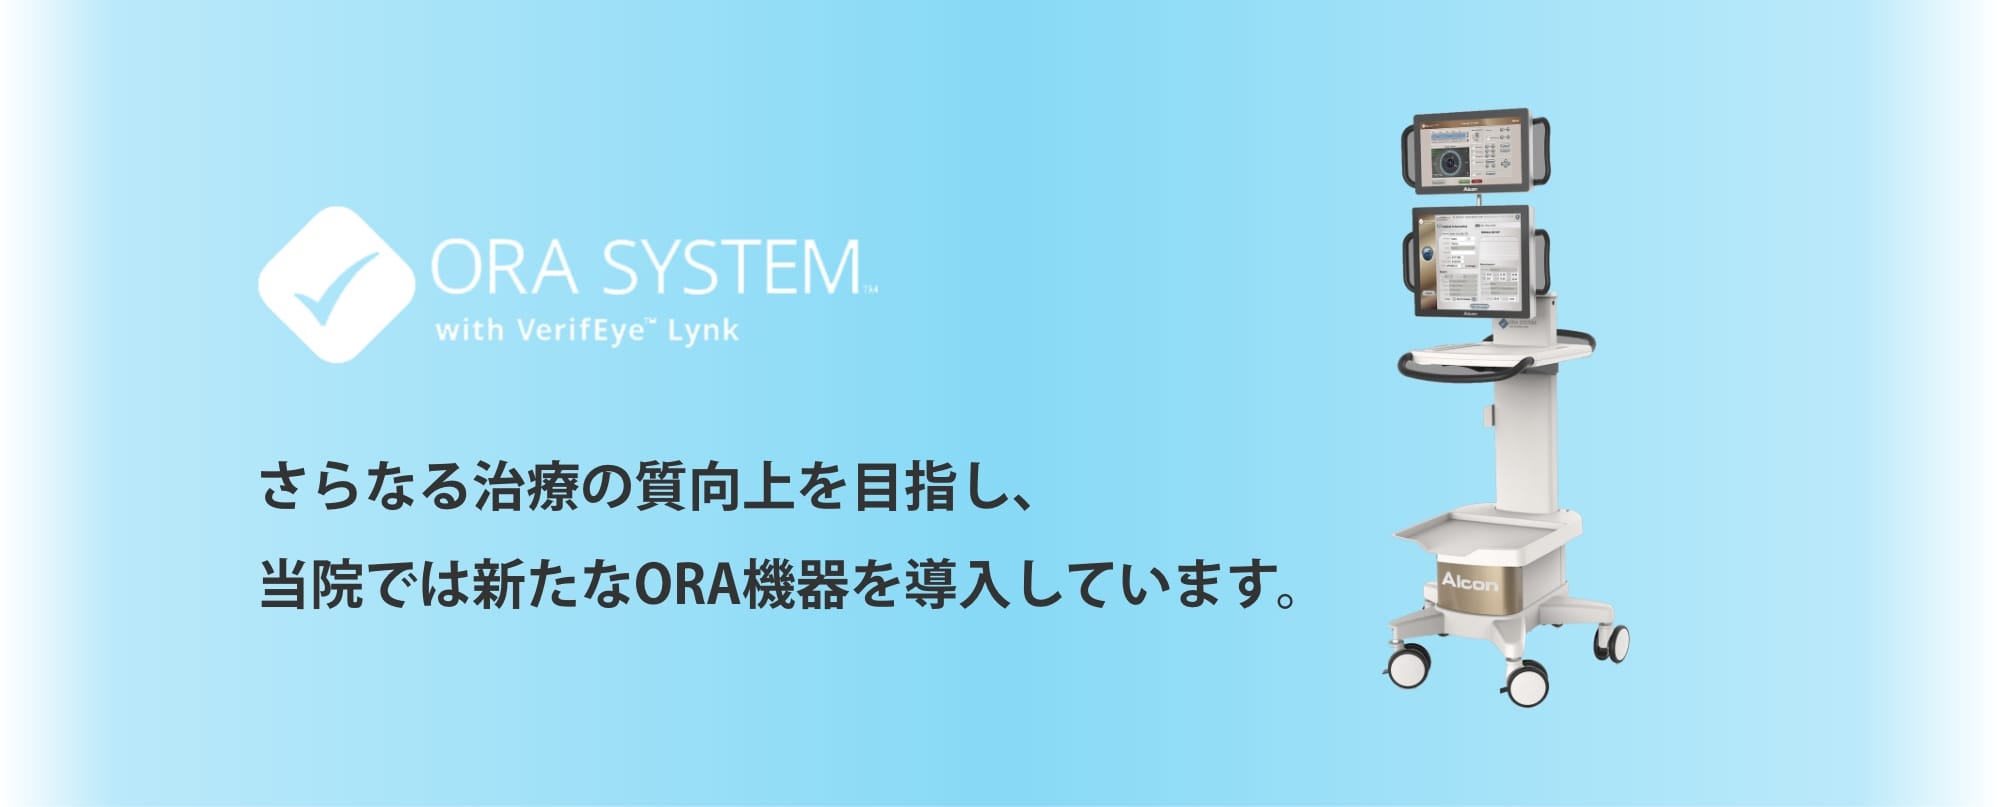 ORA SYSTEM™ WITH VERIFEYE™ LYNK パソコンサイト